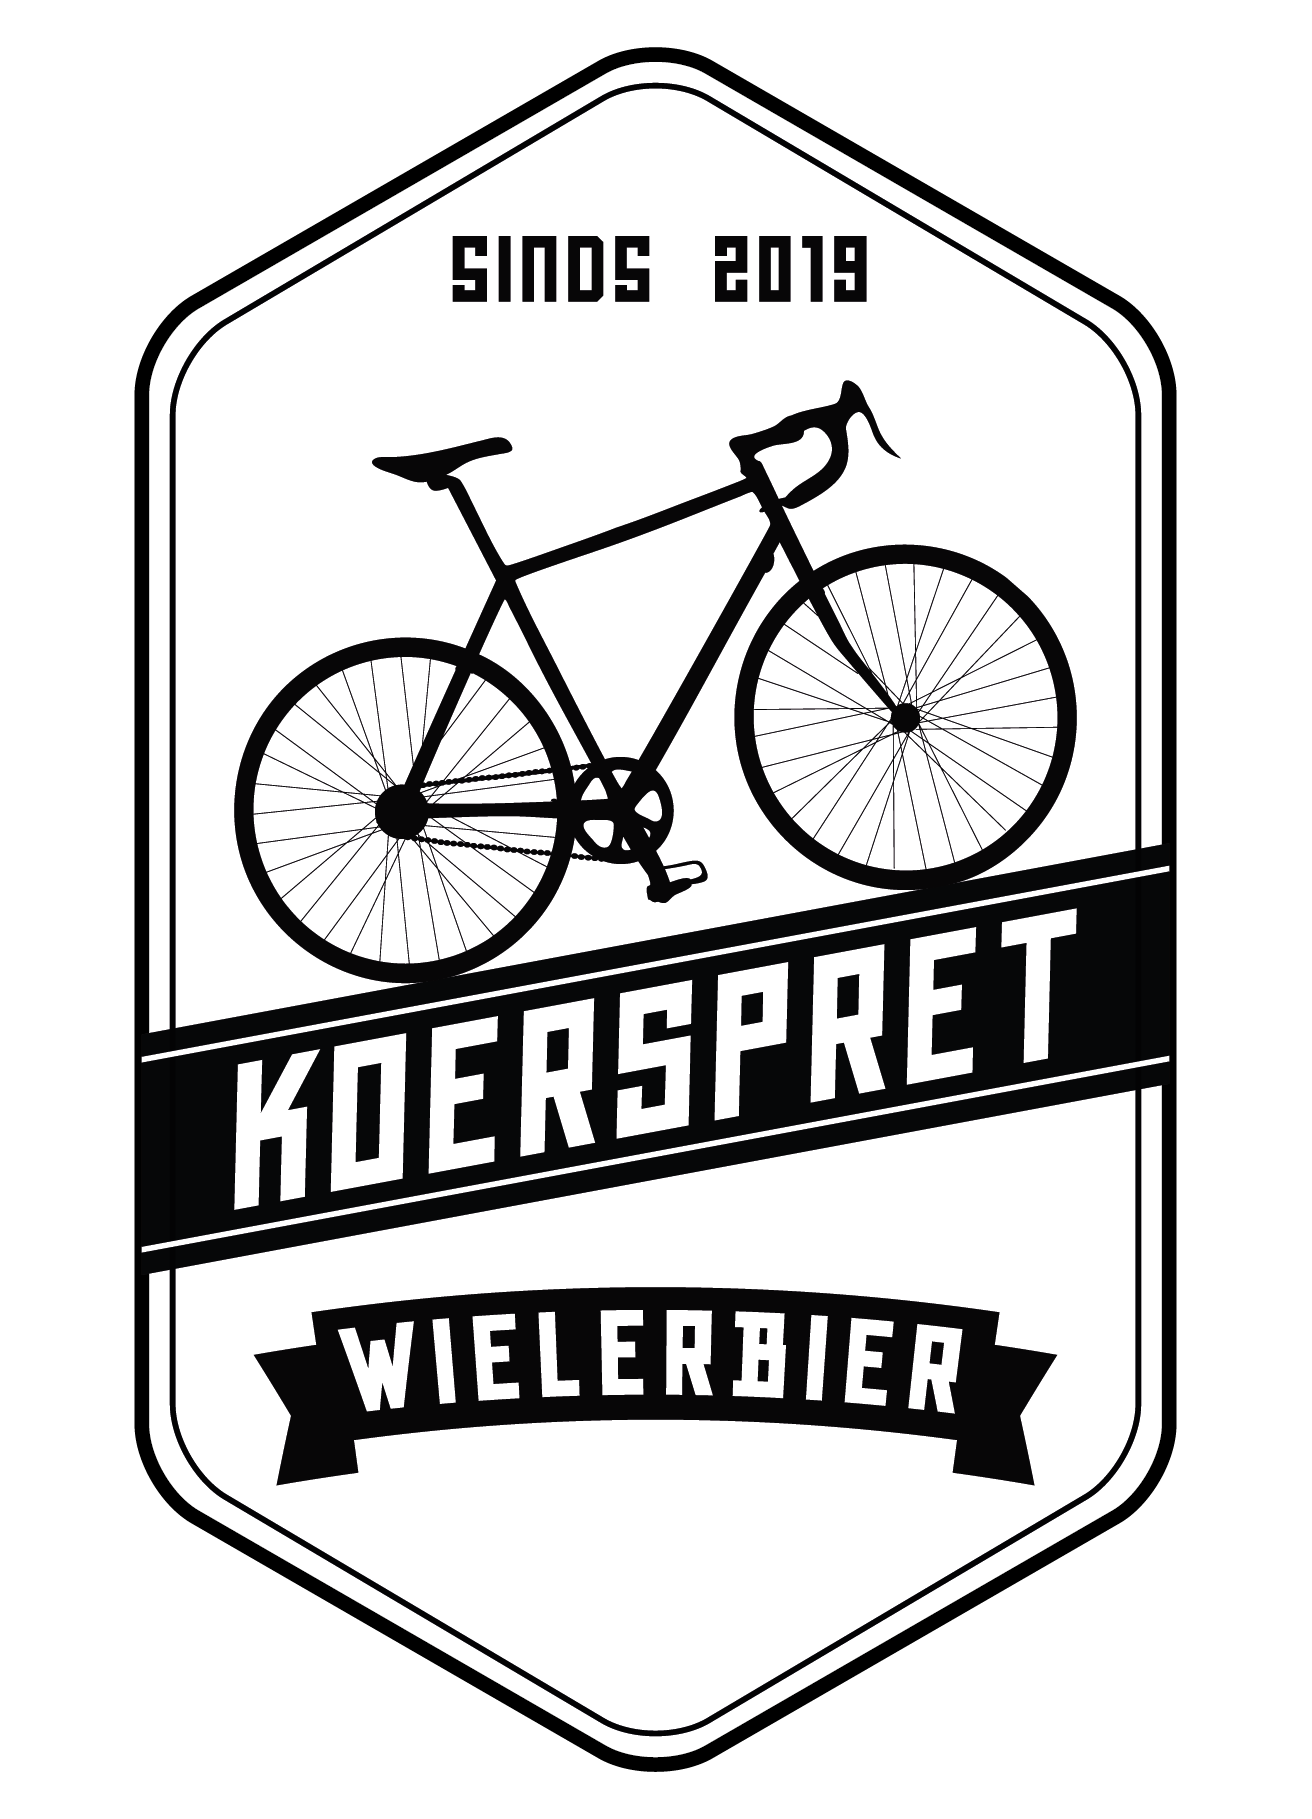 Koerspret_logo_sinds_2019